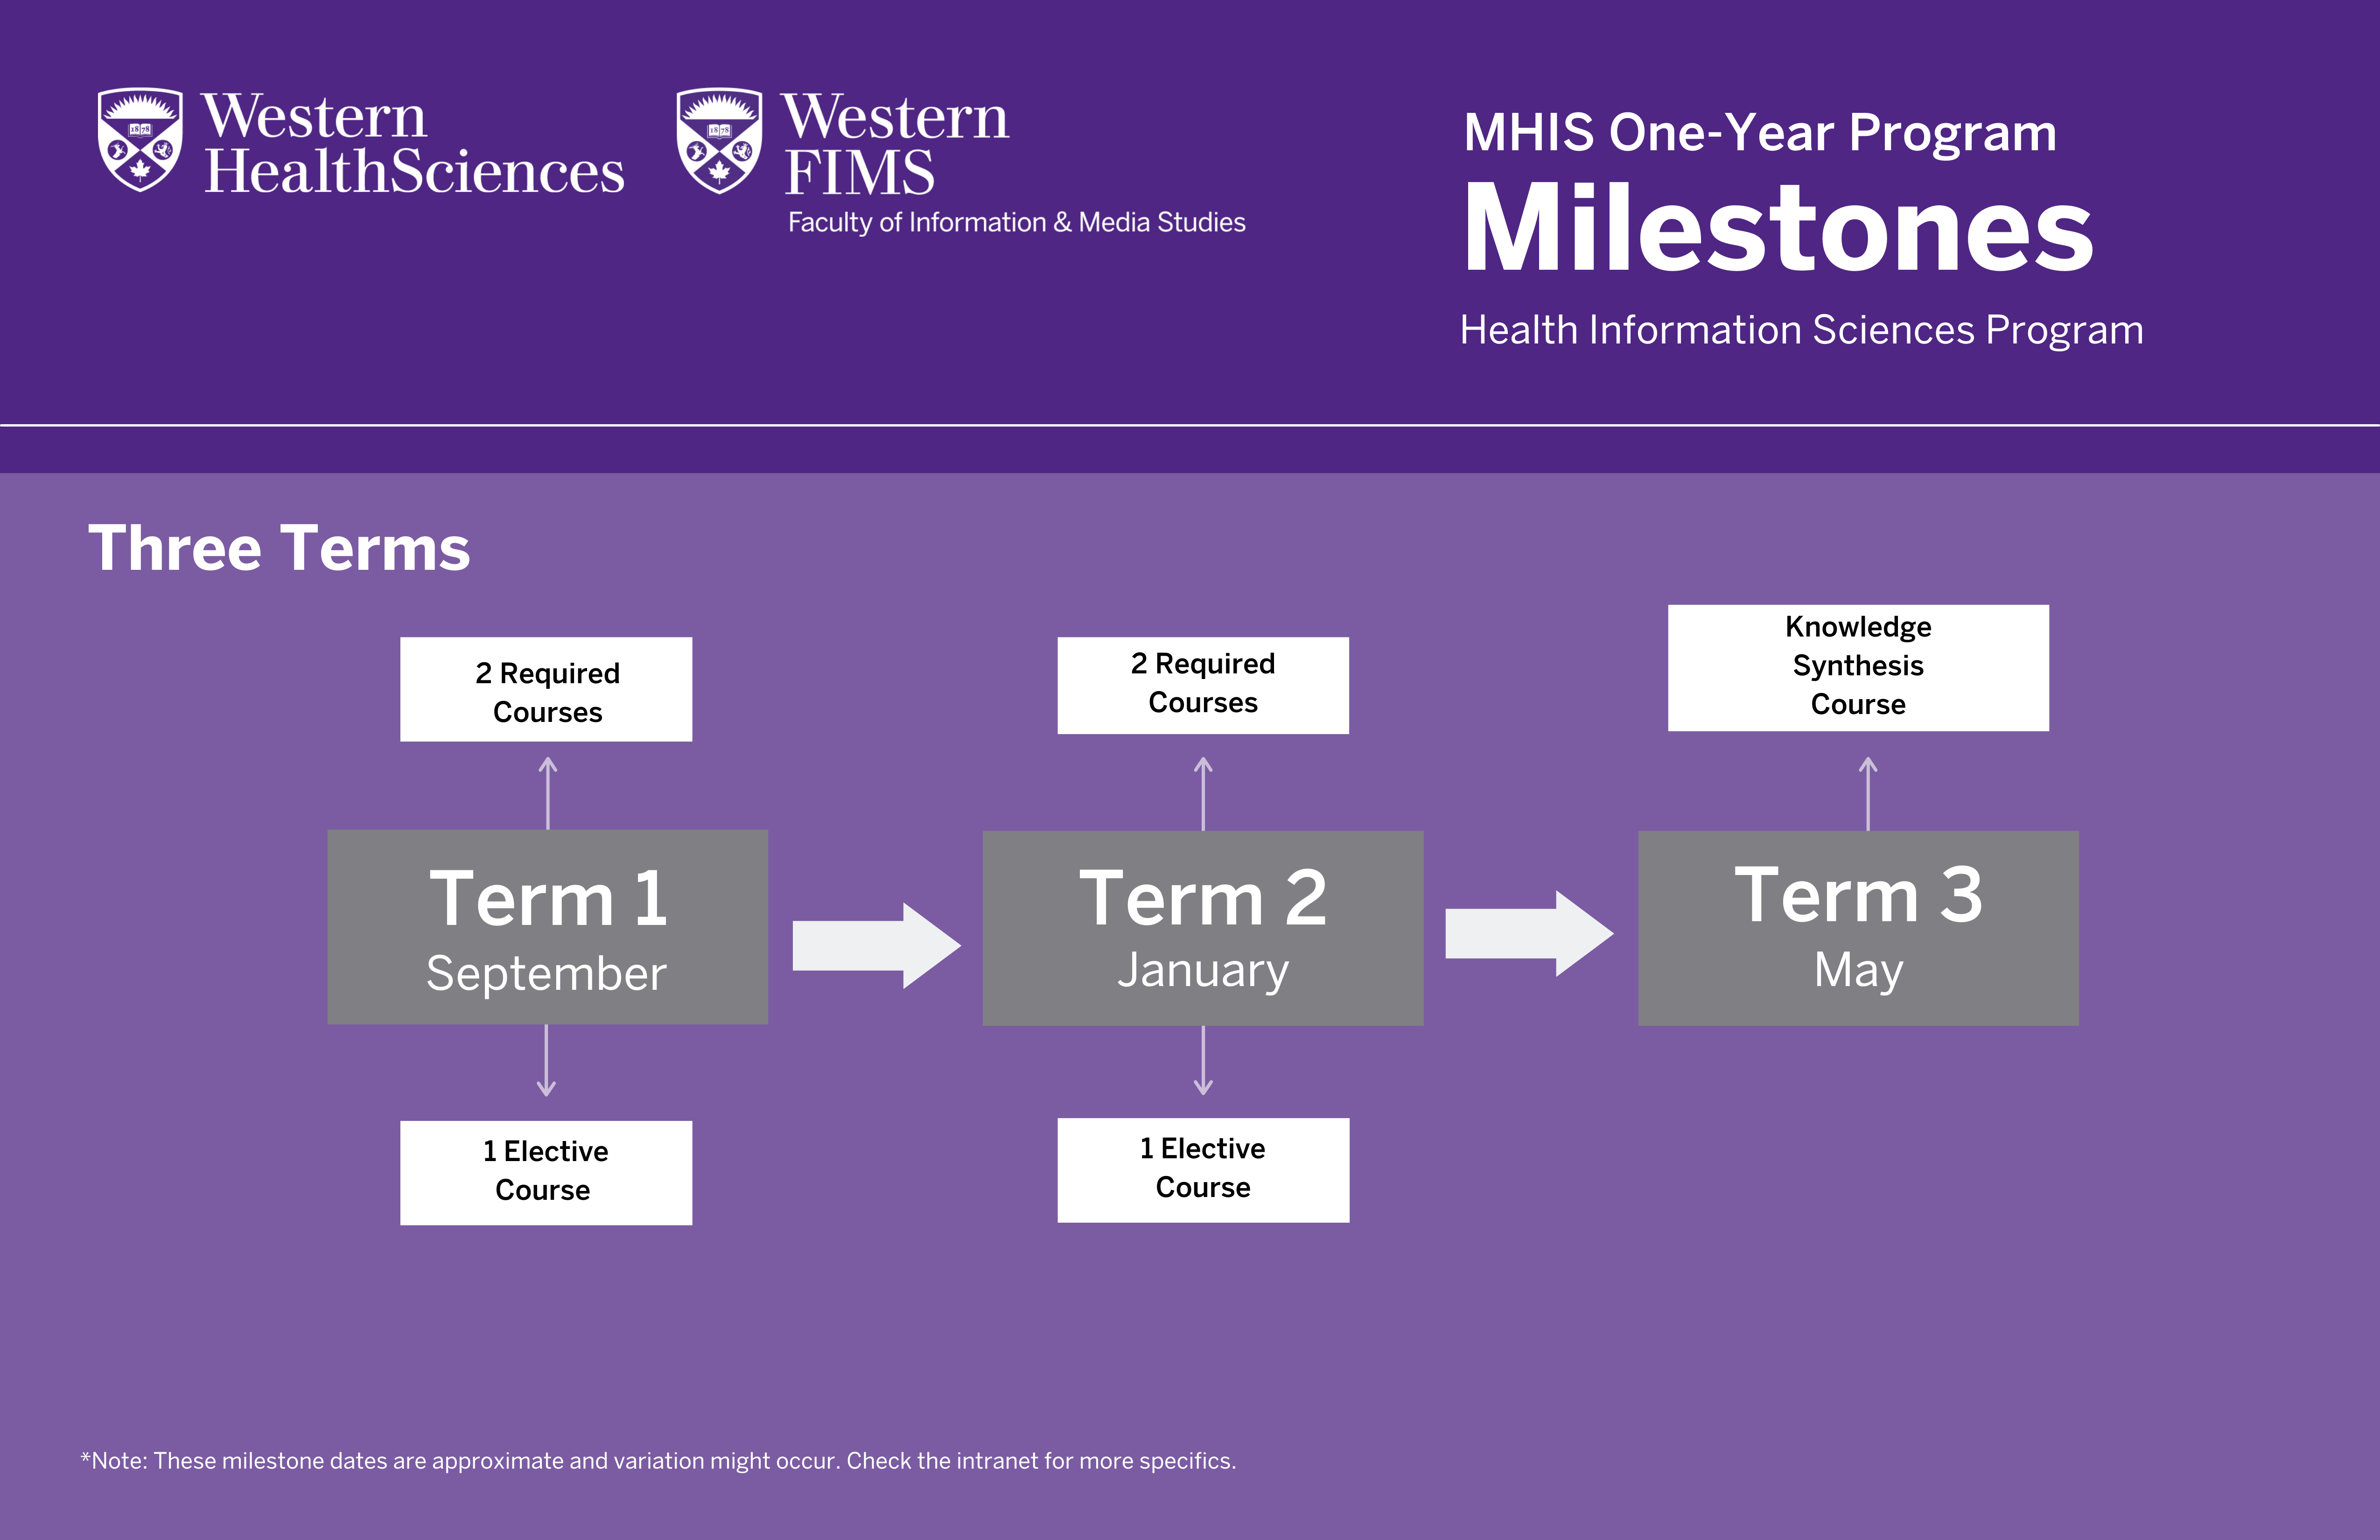 Milestone map for one-year MHIS program